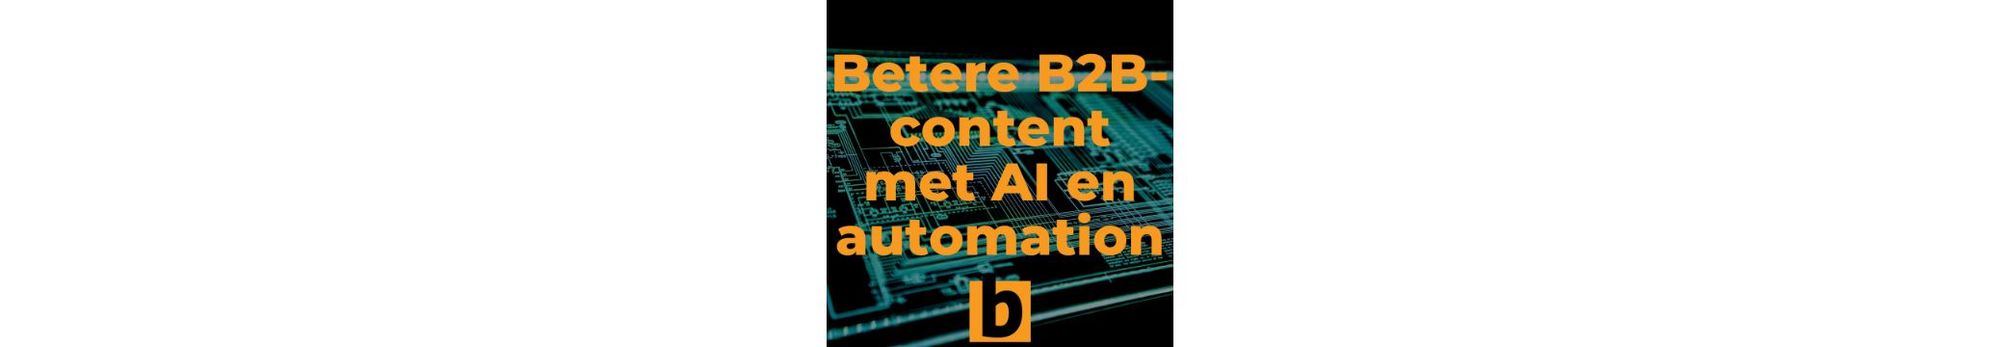 Betere B2B-content met AI en automation